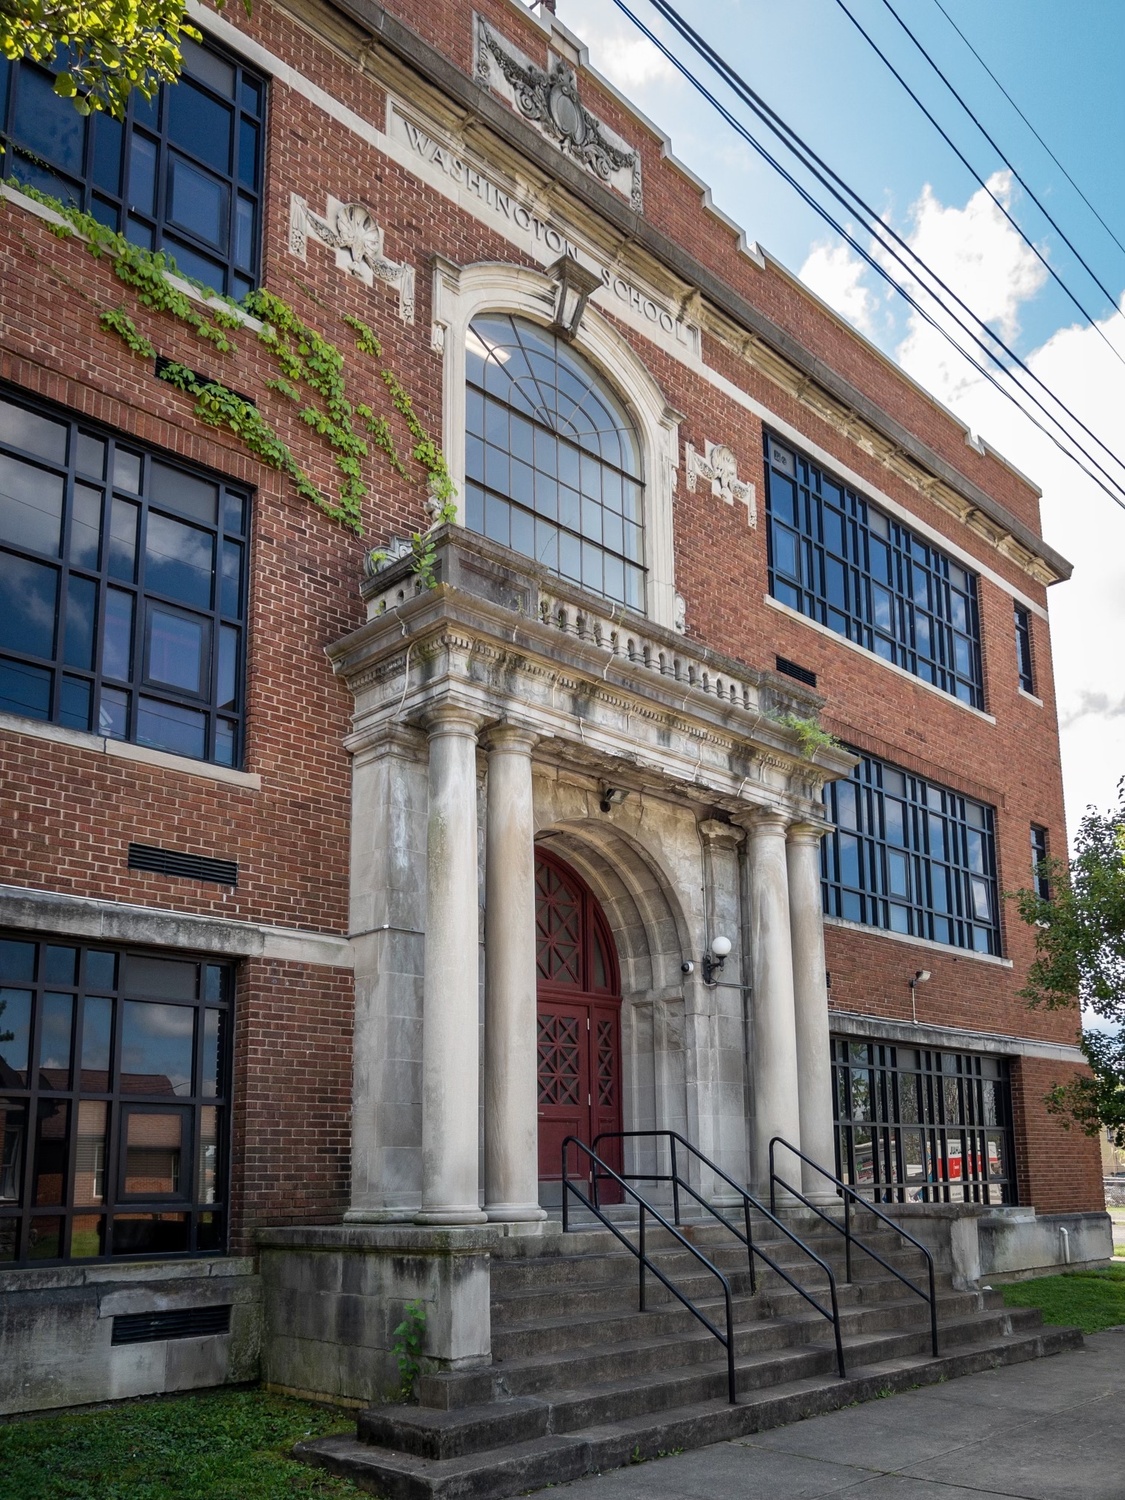 Eleventh Street Entrance to the Booker T. Washington School, Portsmouth, Ohio